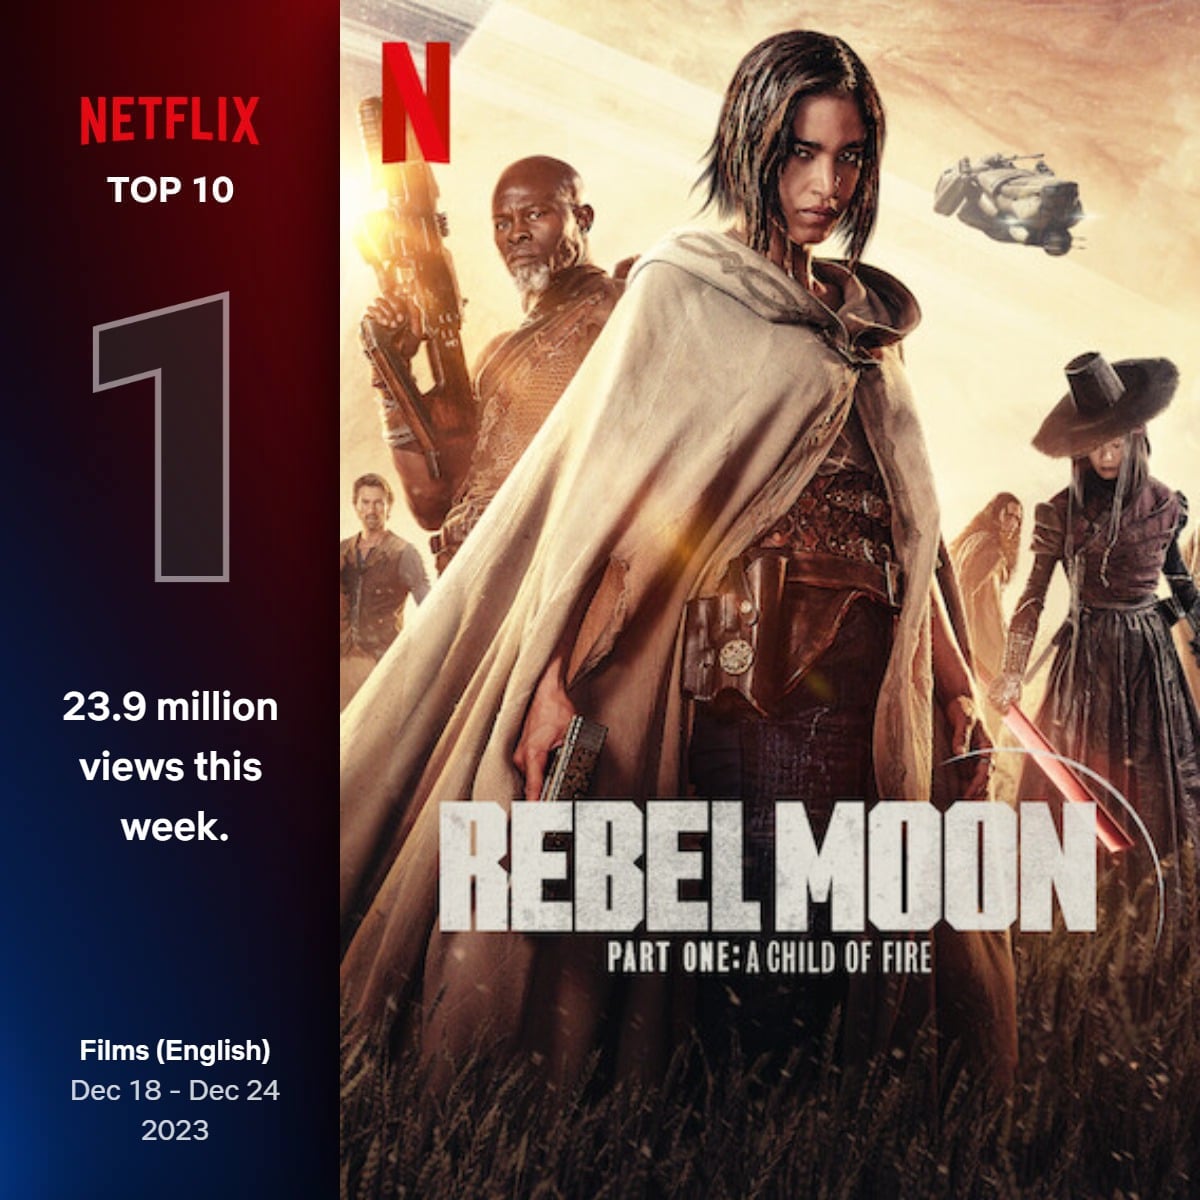 rebel moon netflix ratings top 10